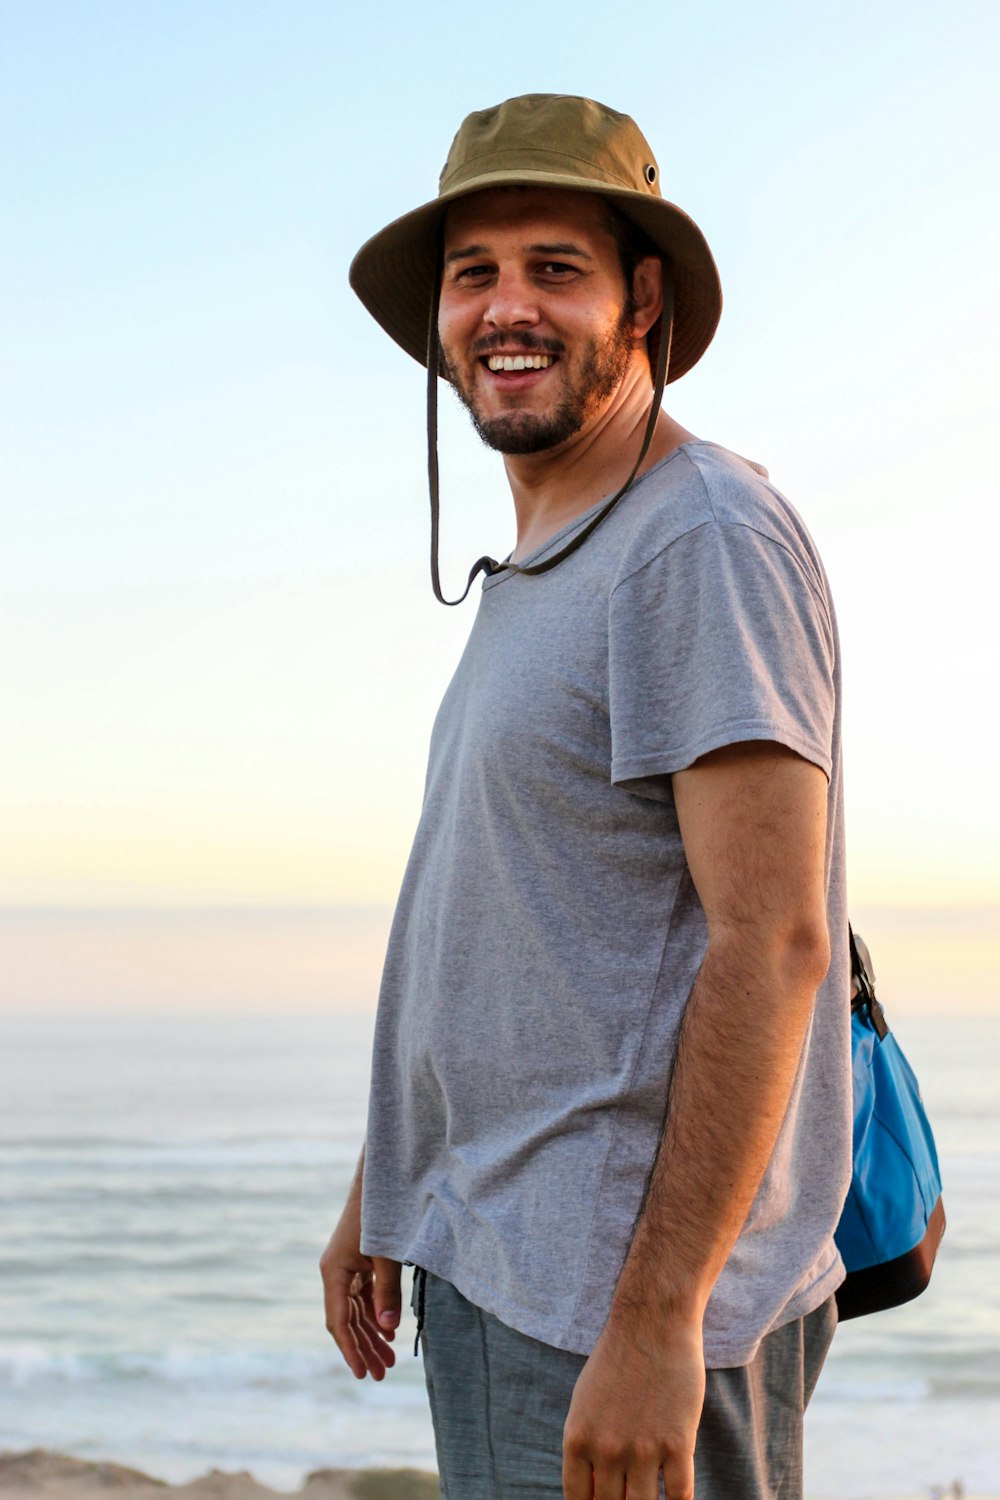 a man wearing a hat standing on a beach